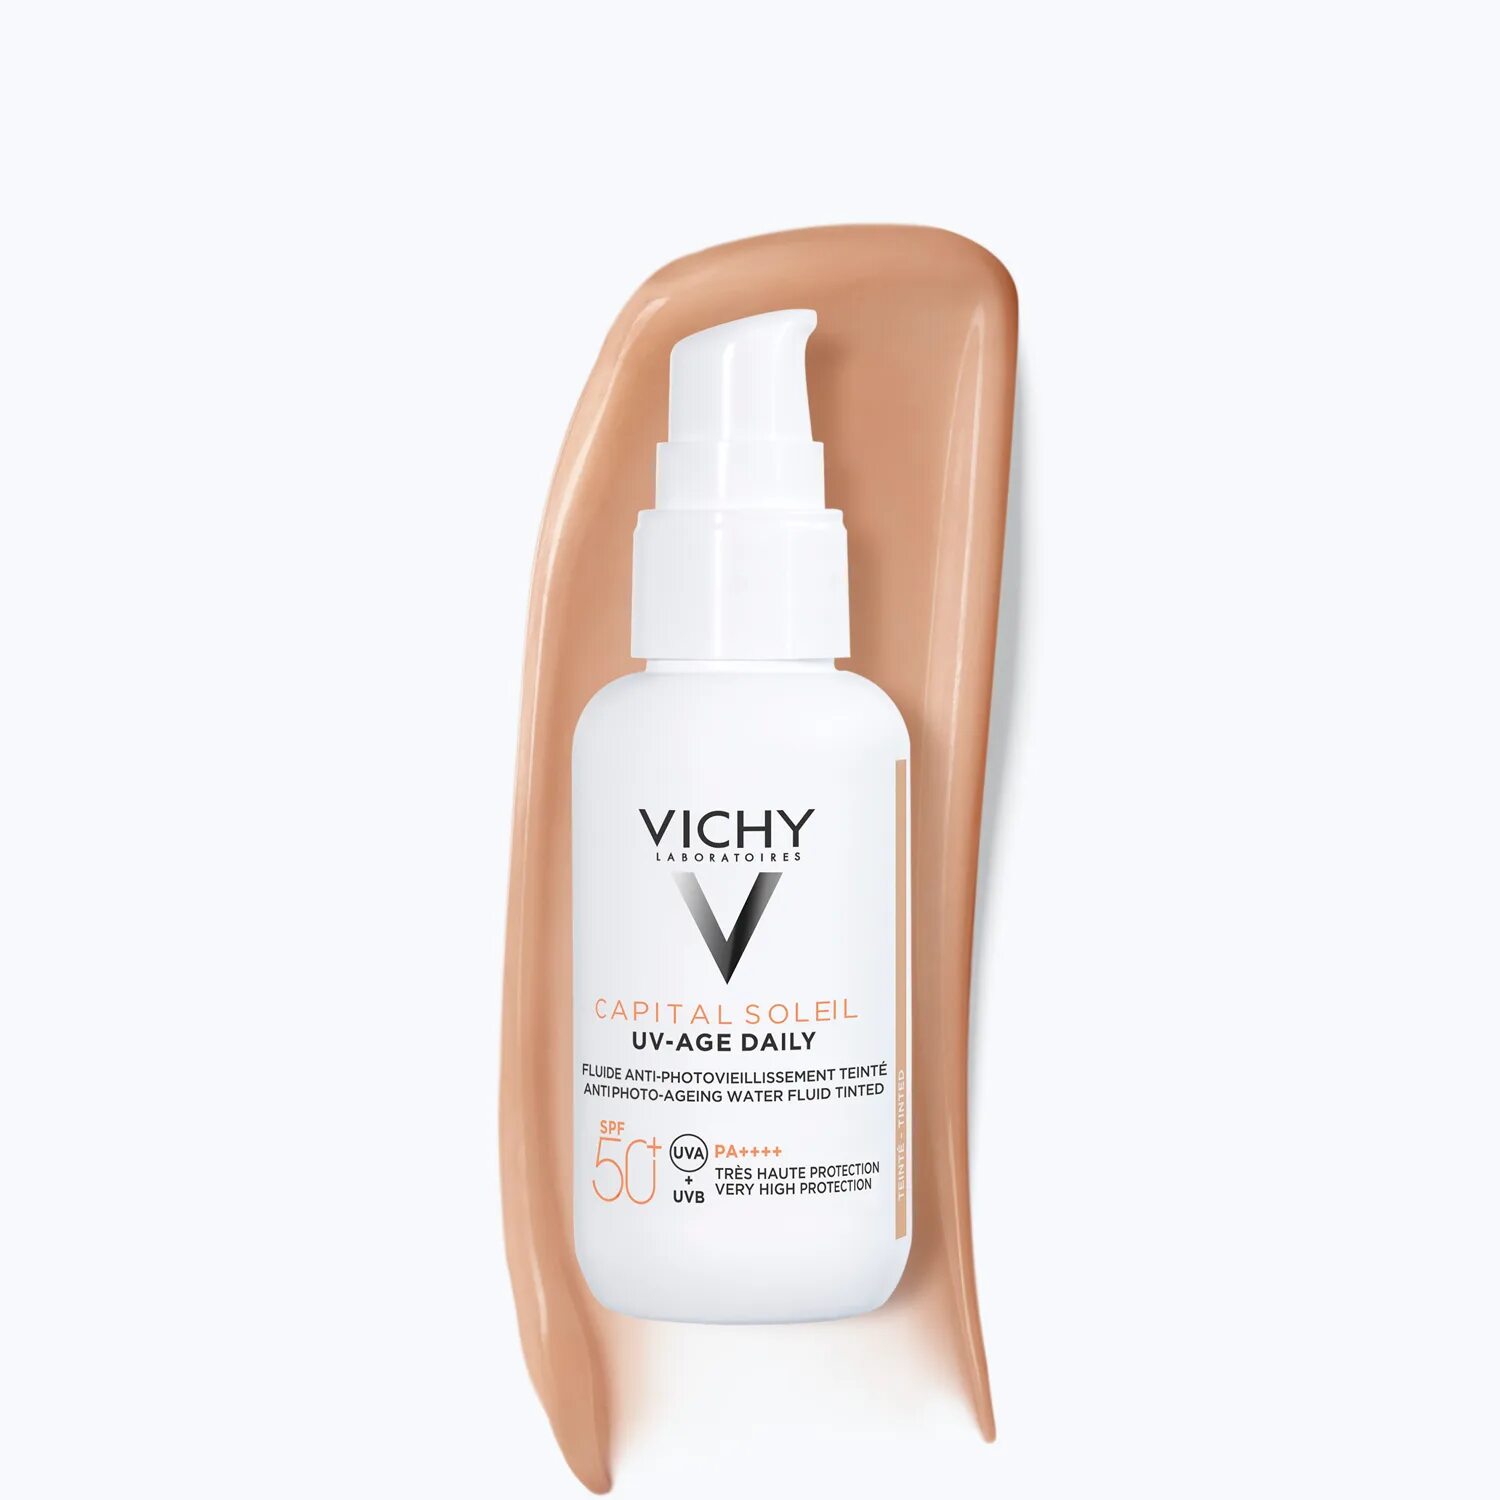 Vichy солнцезащитный флюид spf50+. Vichy Capital Soleil UV-age Daily spf50+. Виши невесомый солнцезащитный флюид. Vichy невесомый флюид UV age Daily.